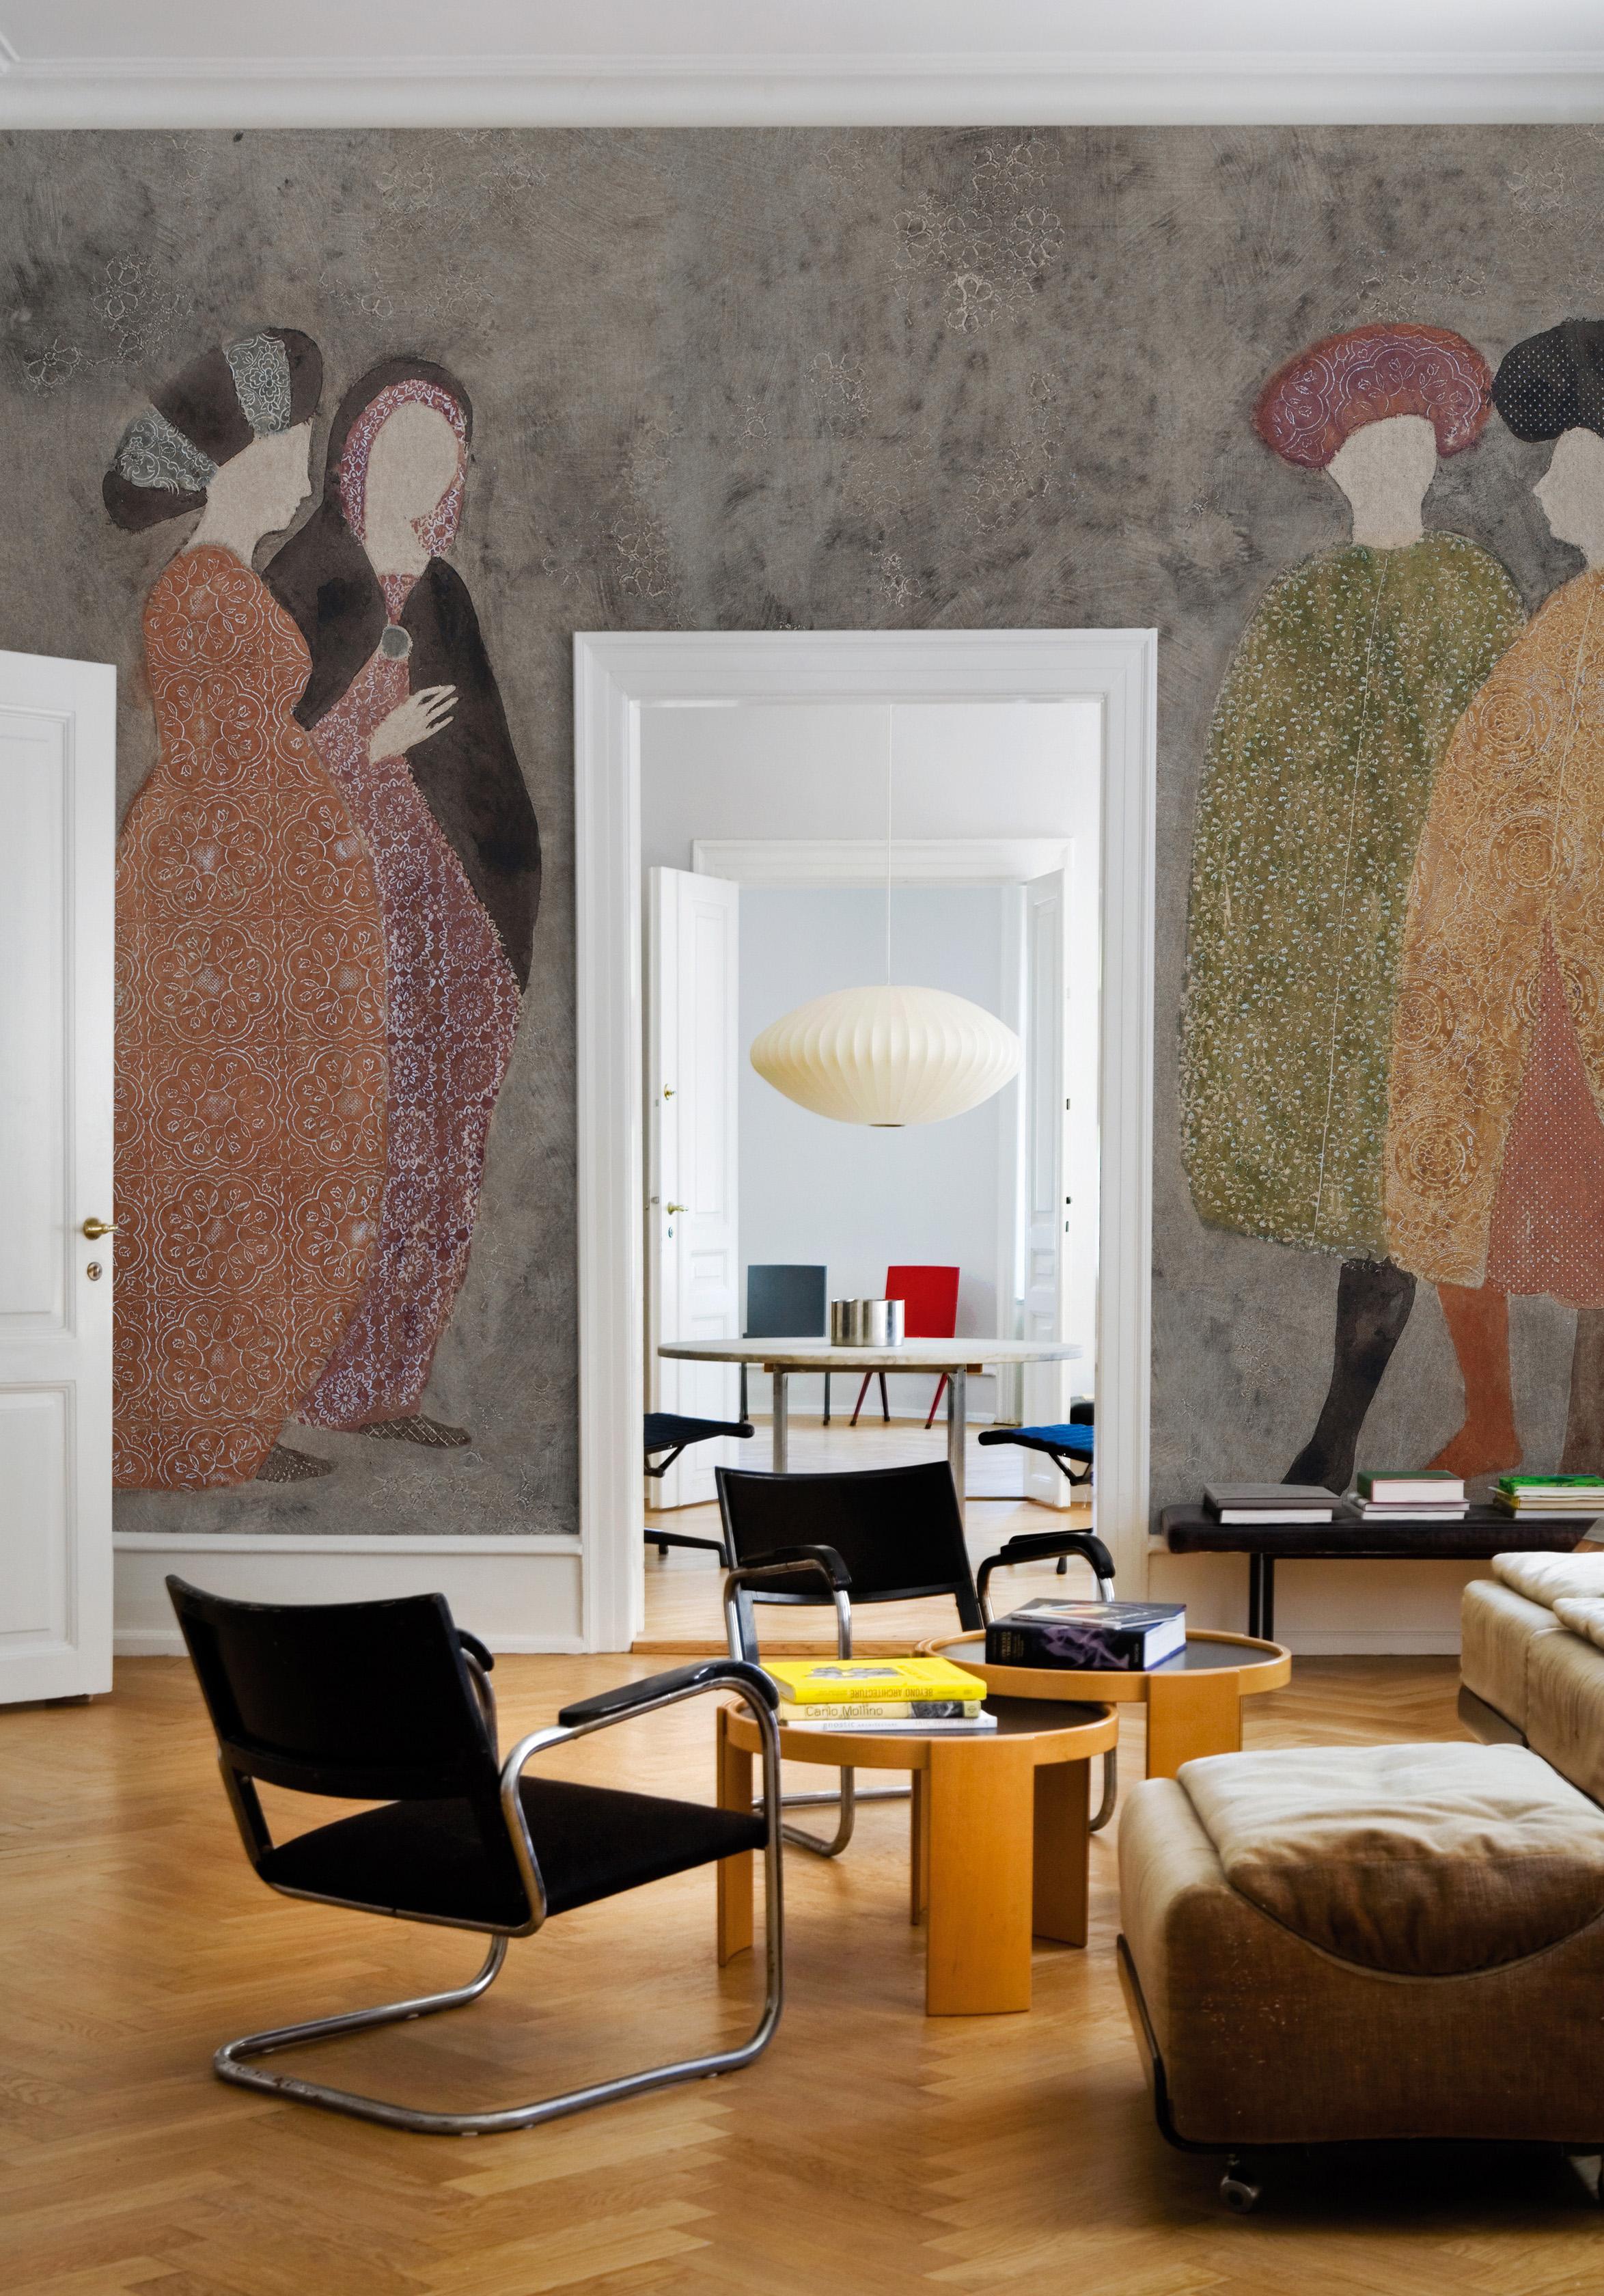 Tapete mit Gemälde-Motiv #couchtisch #sessel #wandgestaltung #motivtapete #sofa #lampe #wall&deco #designwand ©Wall&Deco